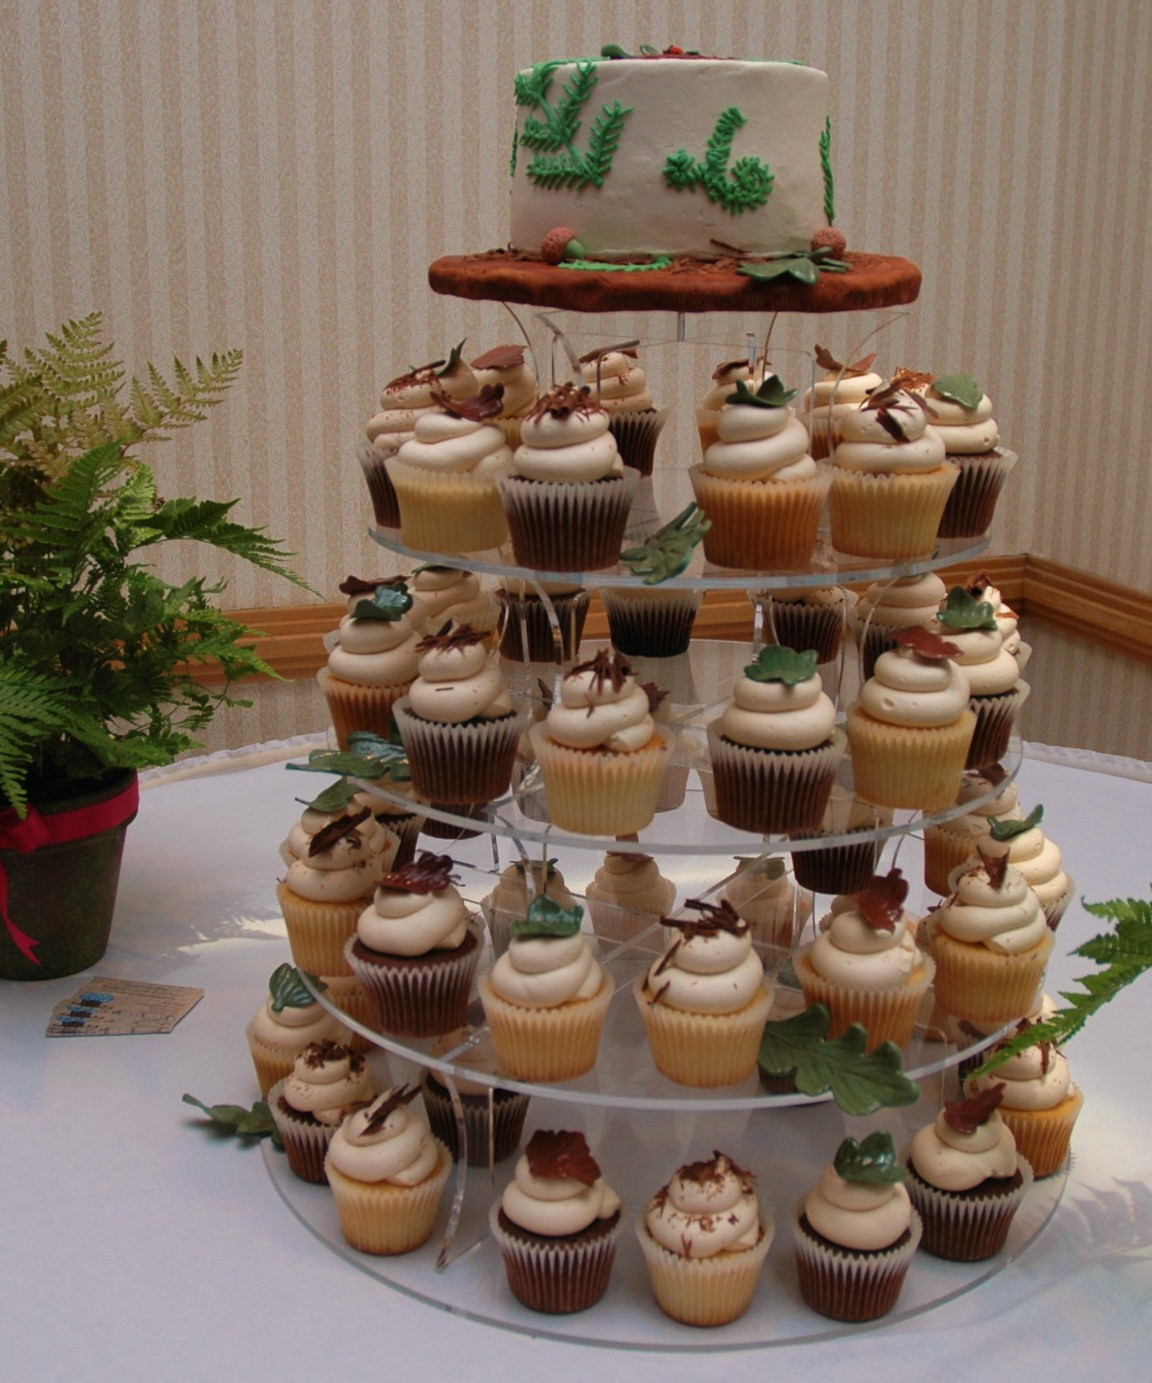 Wedding Rehearsal Cakes
 Tara s Cupcakes Forest Themed Wedding Rehearsal Cake and